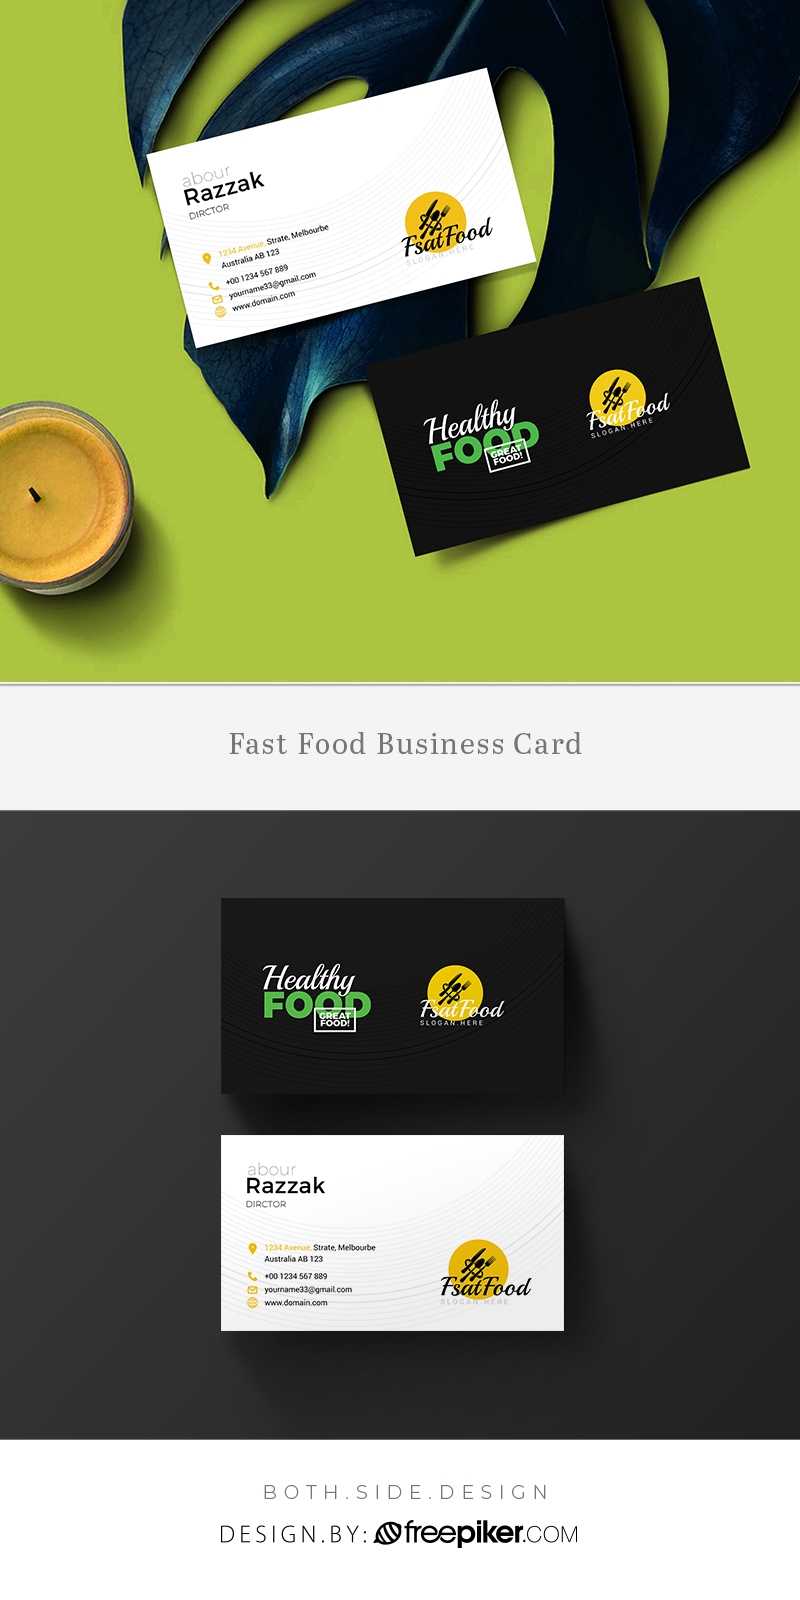 Freepiker | Food And Restaurant Business Card Template For Food Business Cards Templates Free